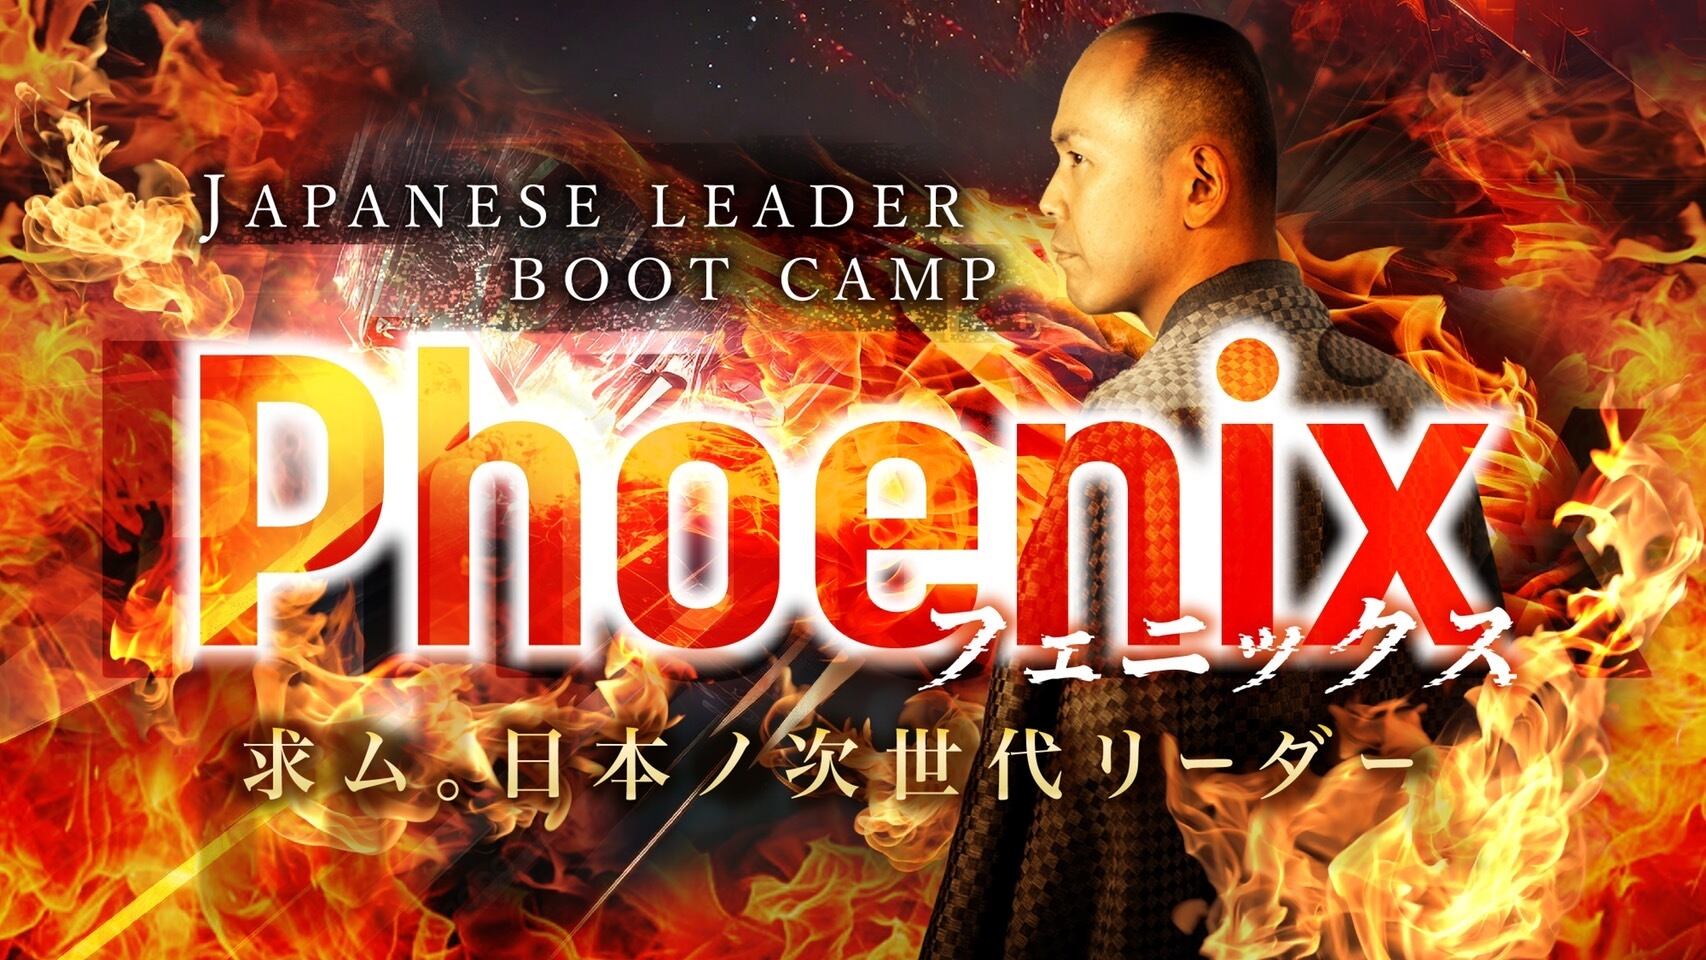 JAPANESE LEADER BOOT CAMP 《Phoenix》学生参加費